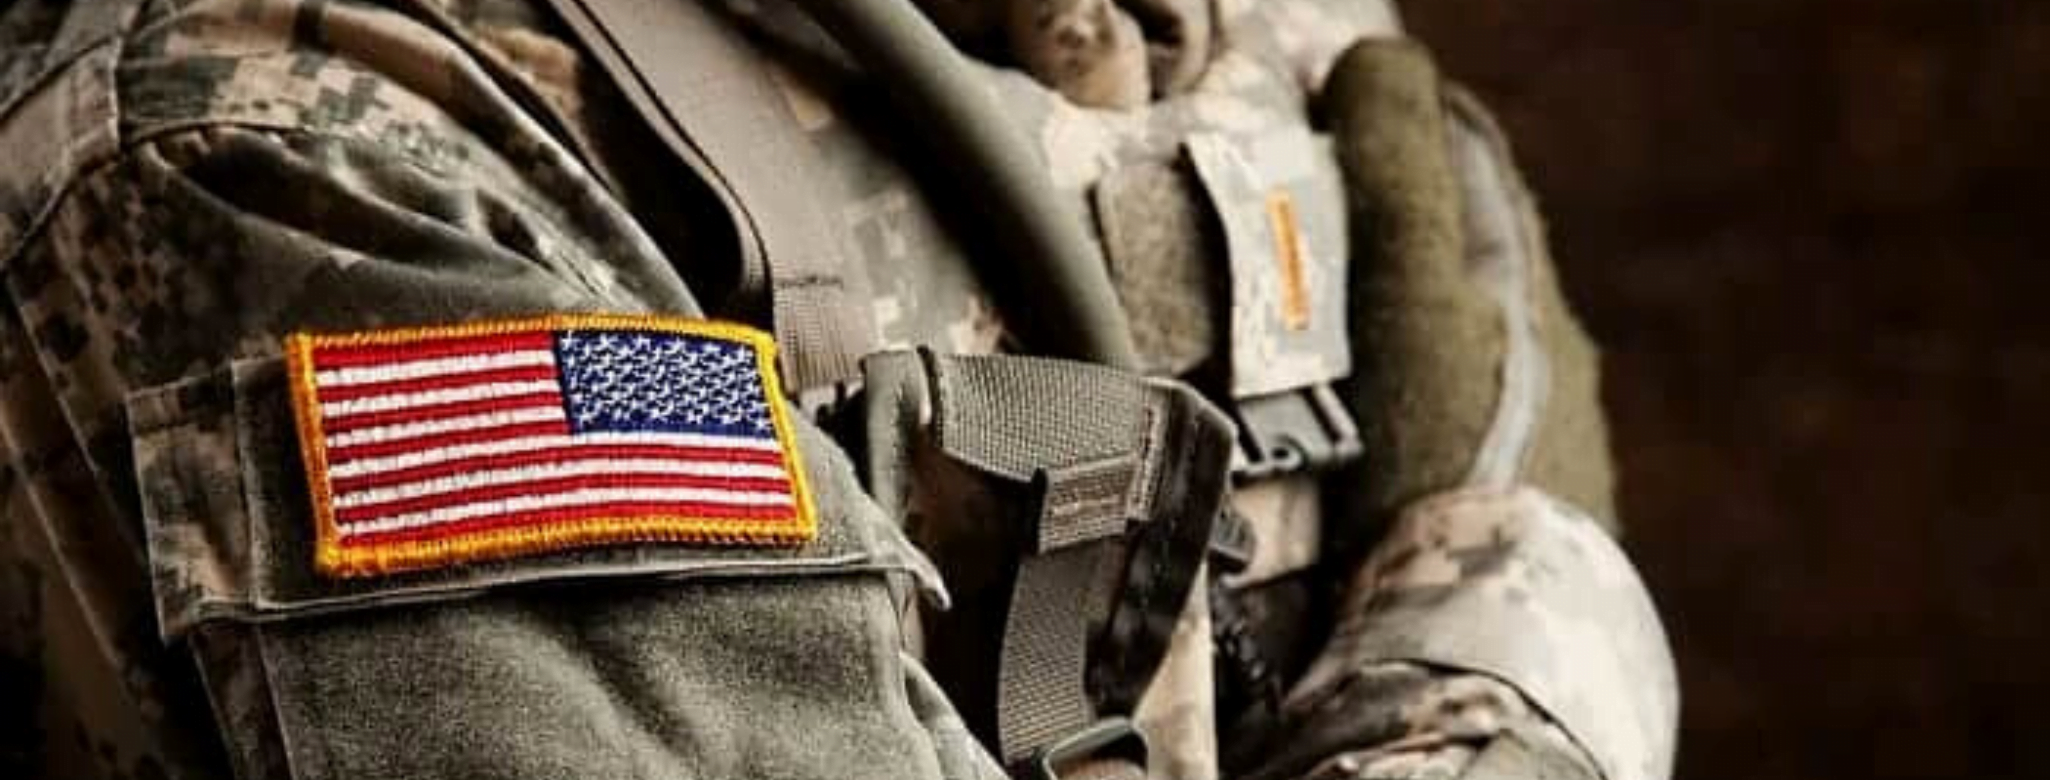 the backwards us flag on military uniforms